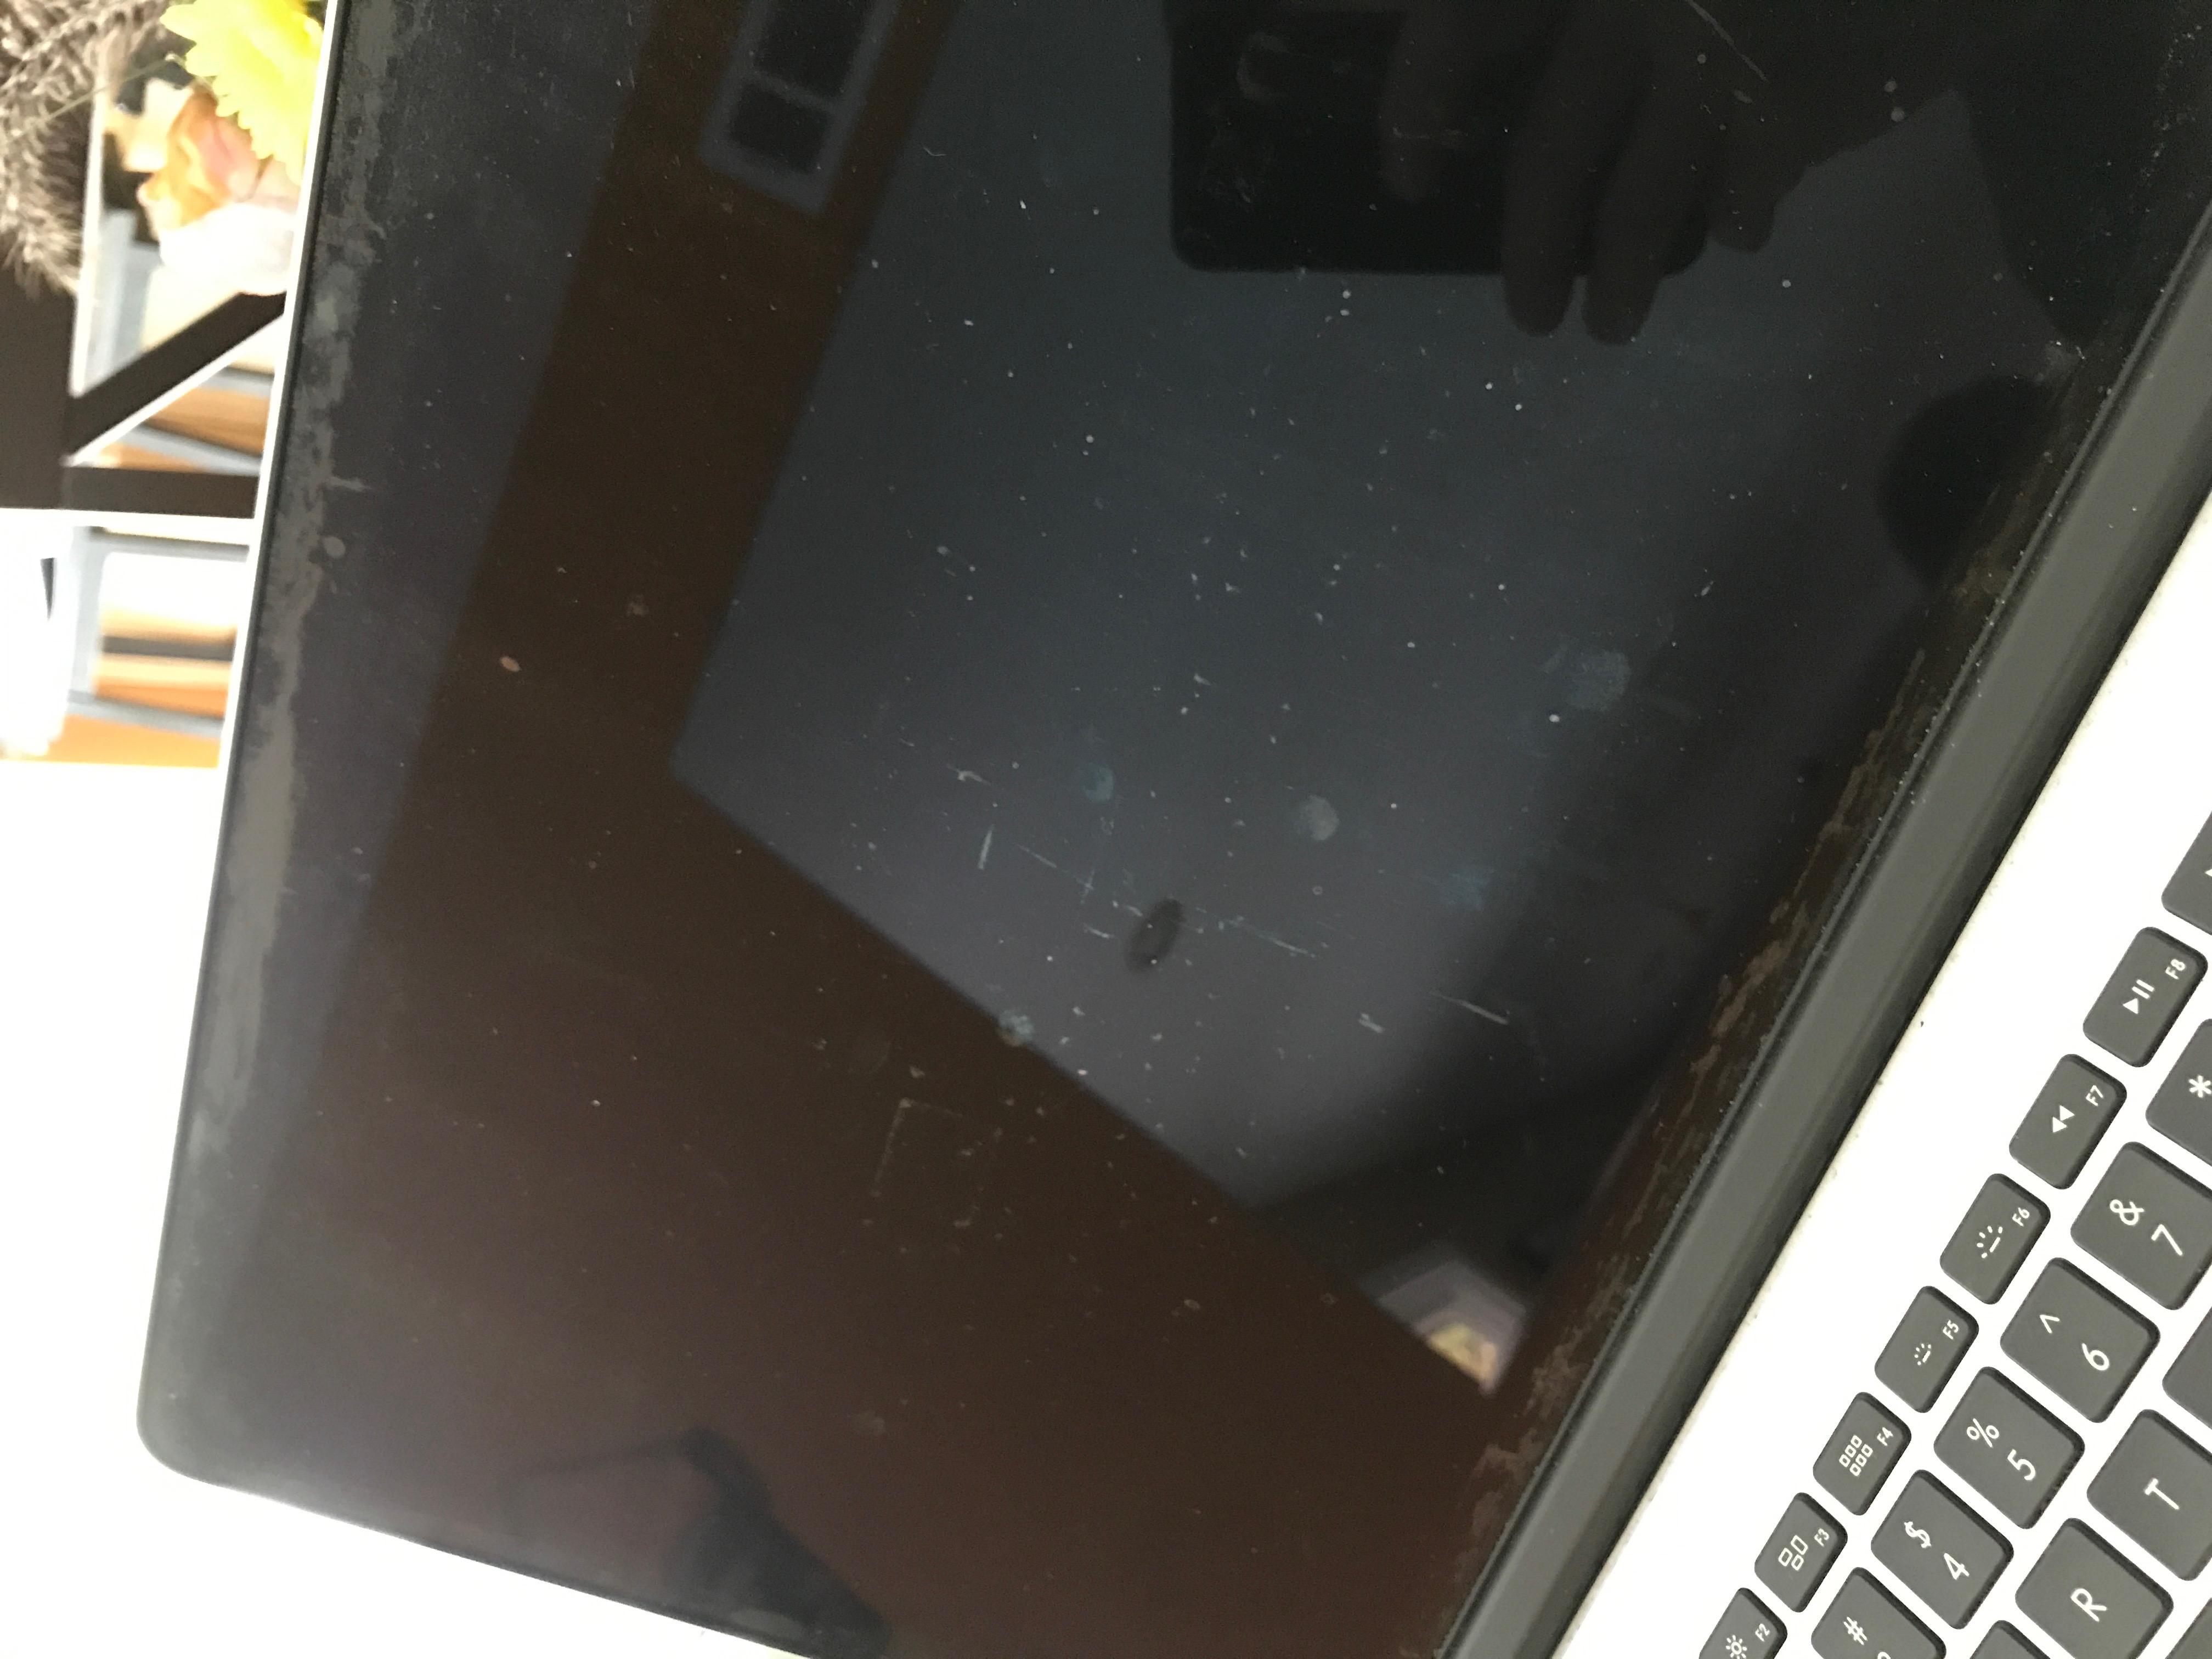 will apple replace my macbook screen coating